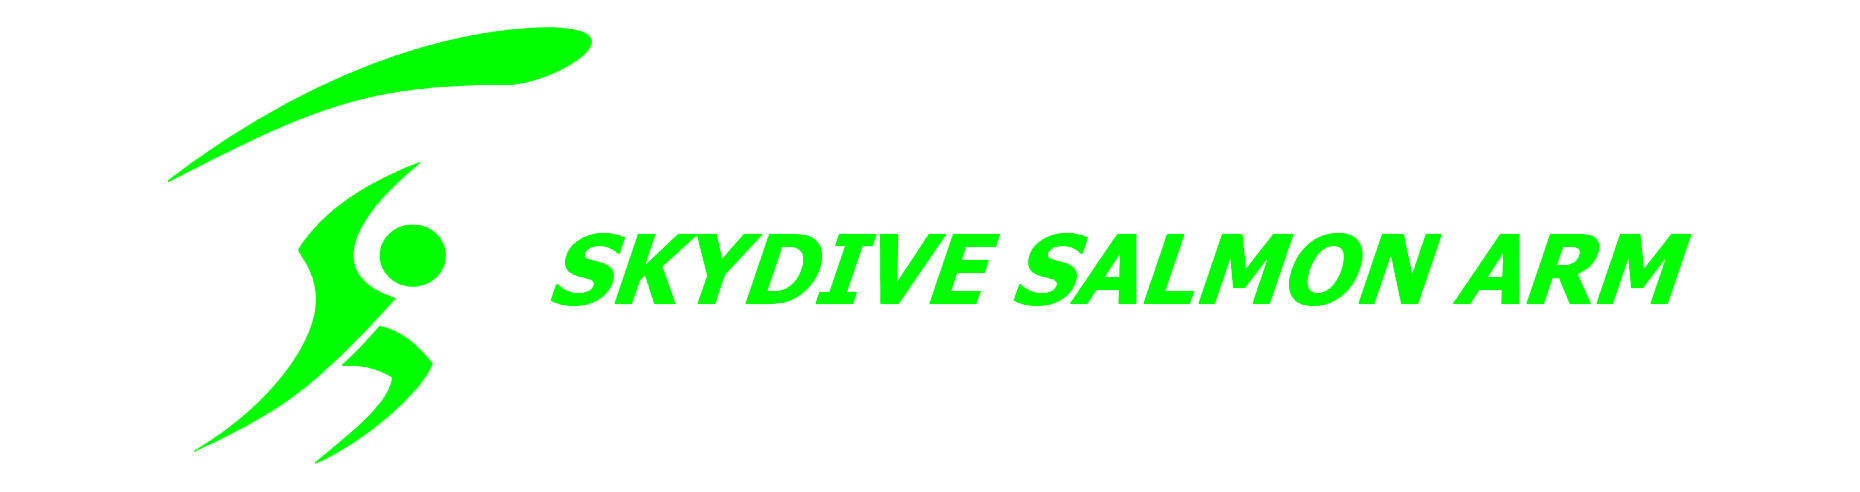 Skydive Salmon Arm logo